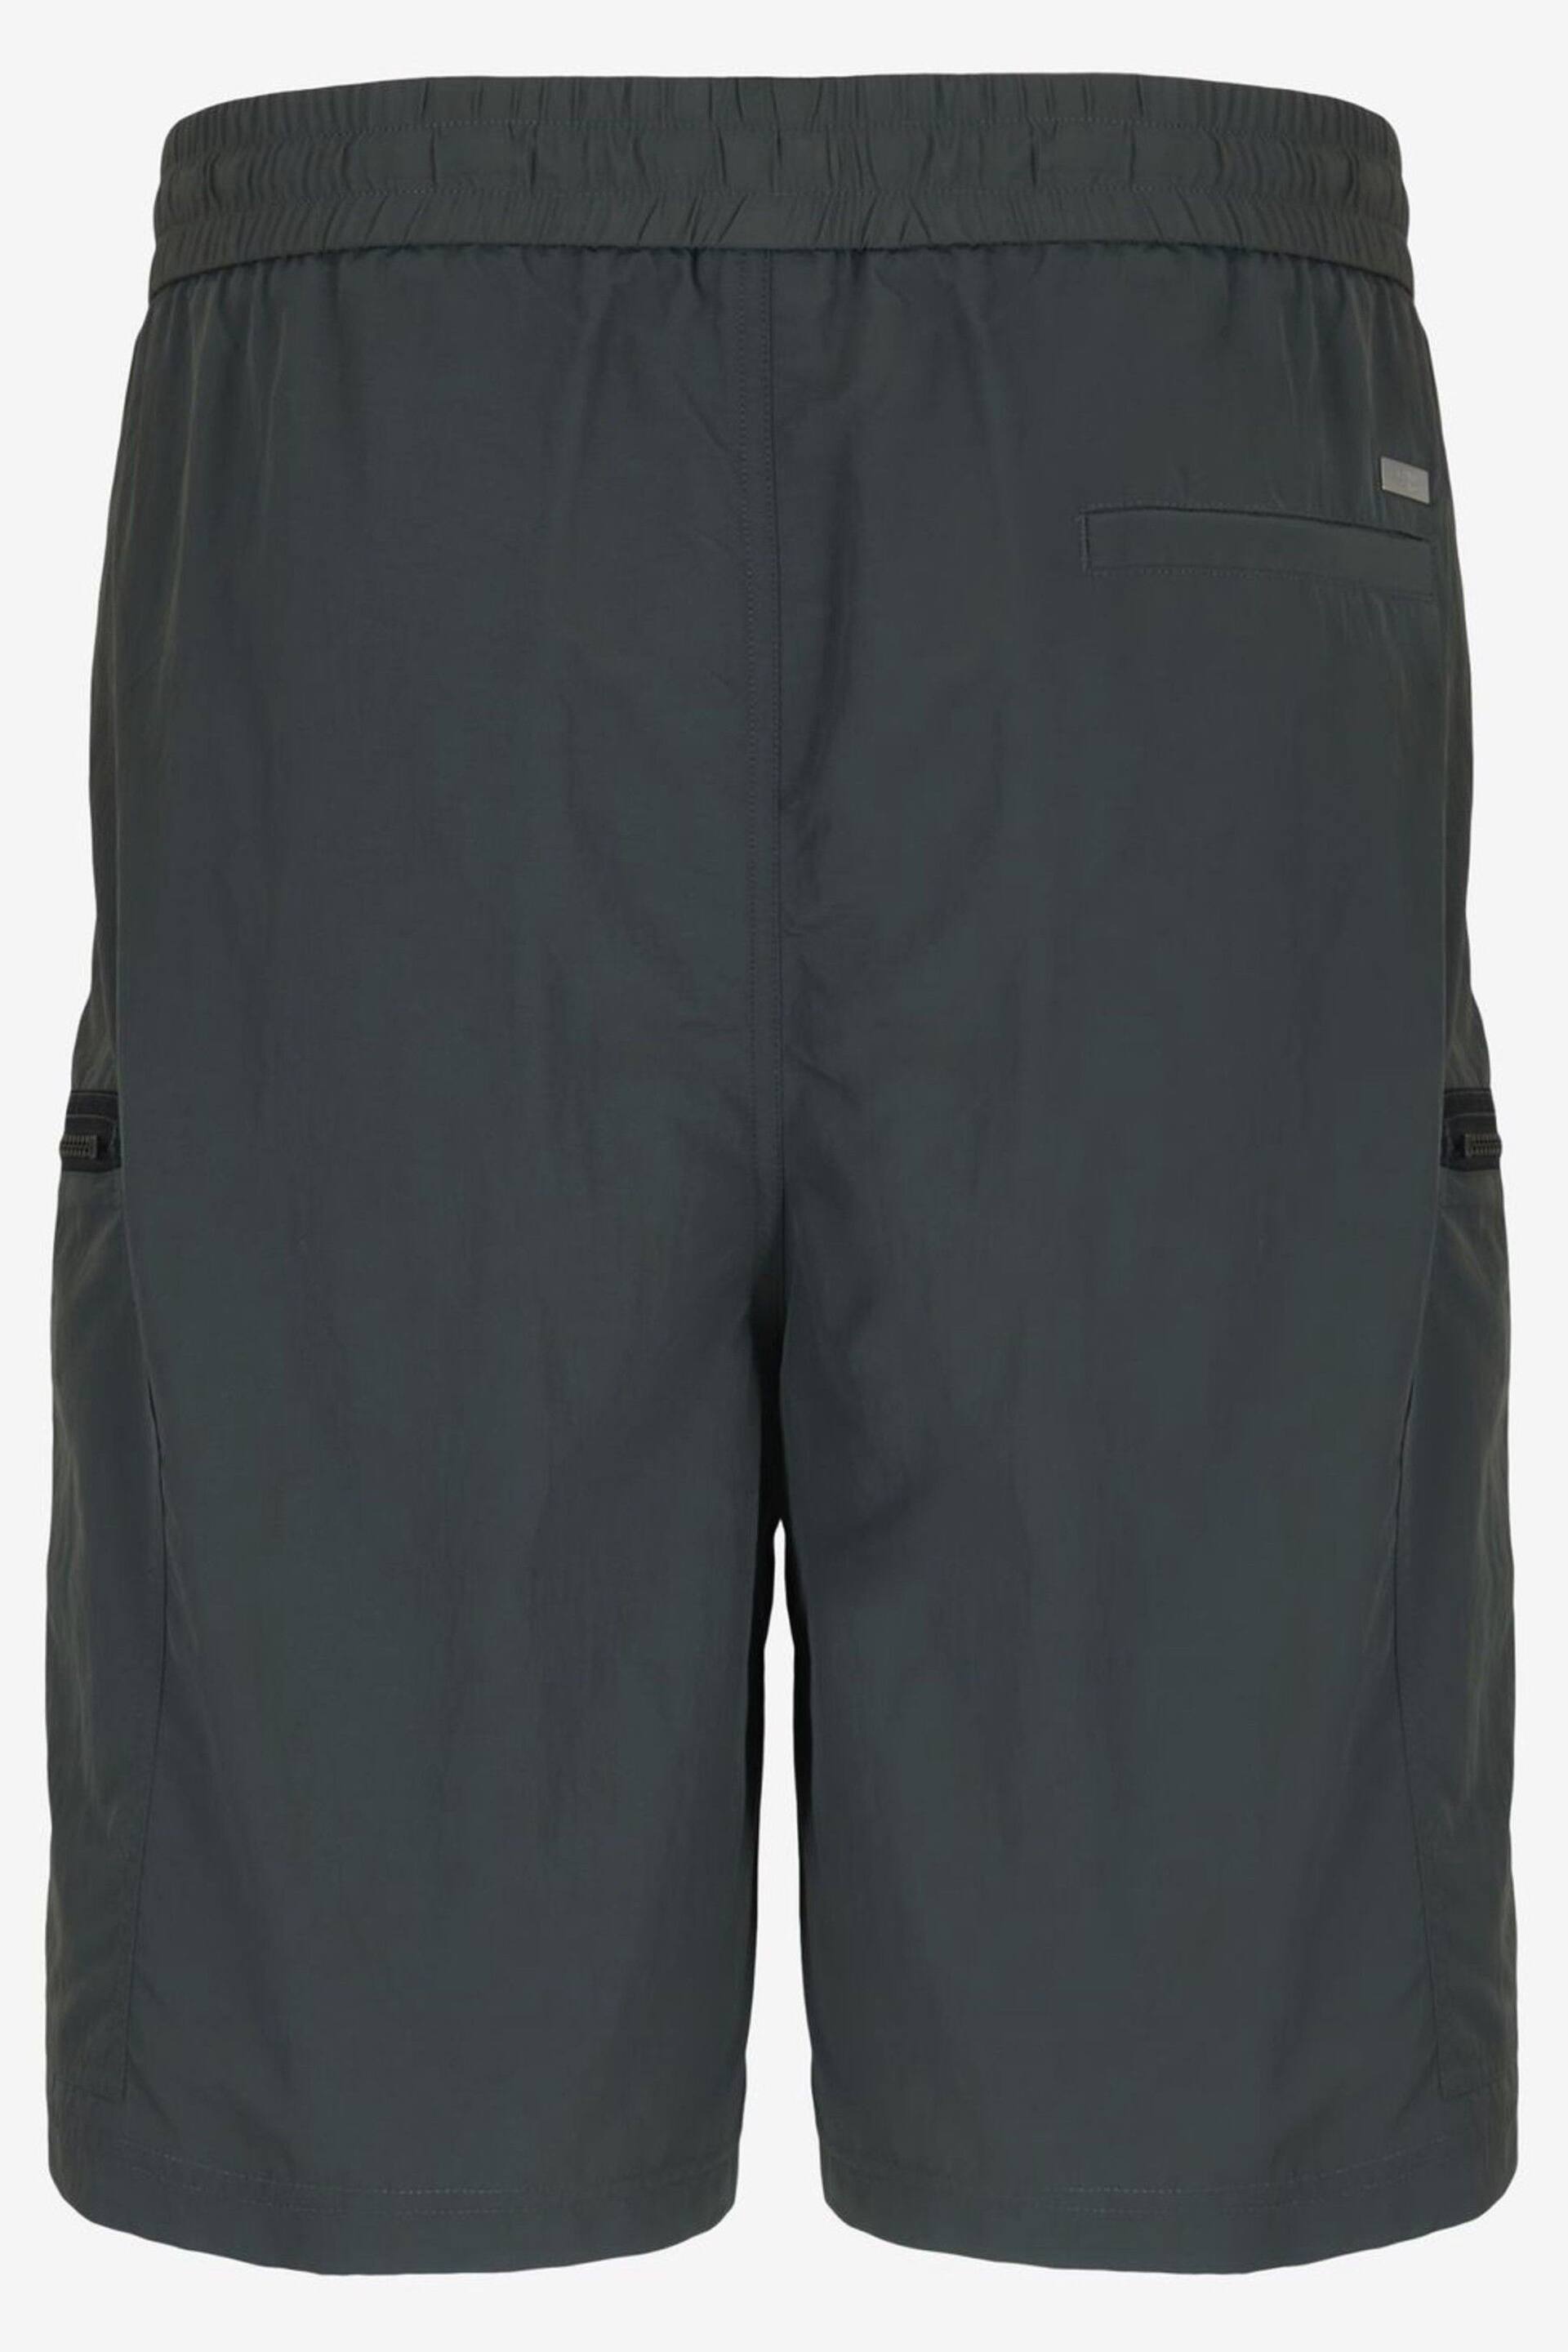 Armani Exchange Dark Grey Cargo Shorts - Image 8 of 8